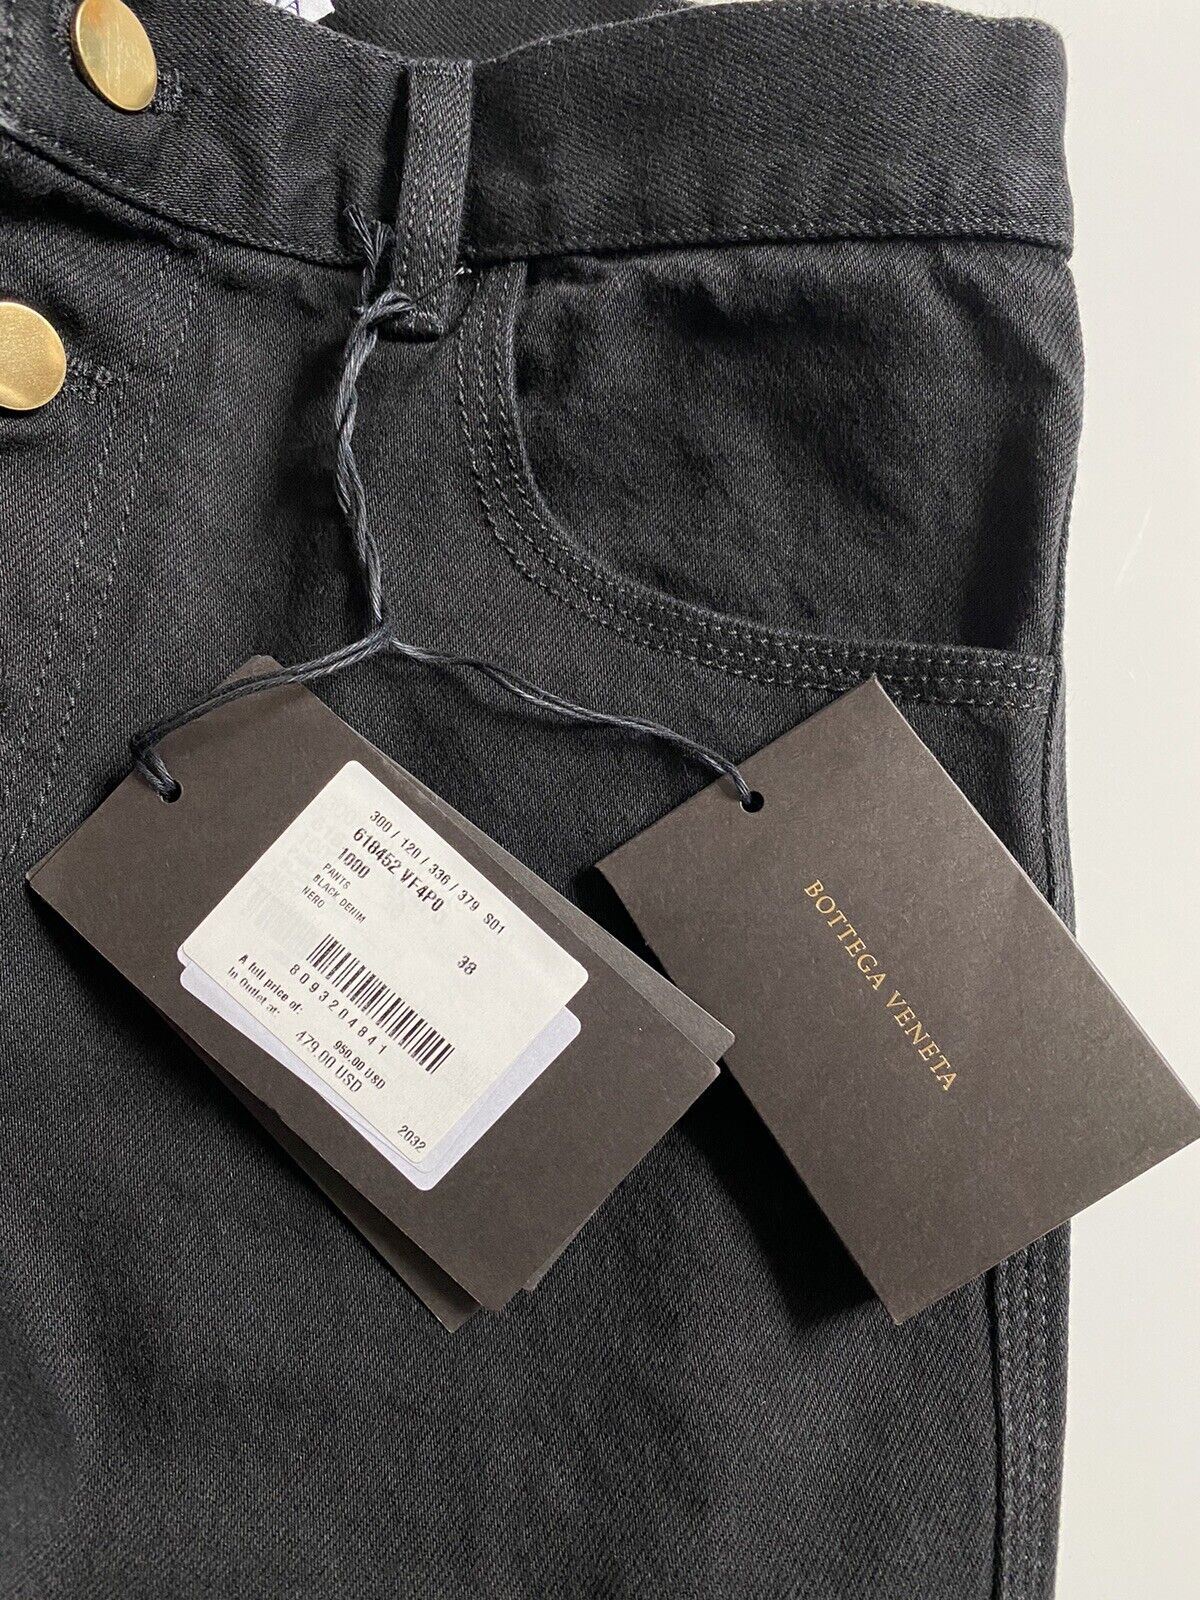 NWT $950 Bottega Veneta High-Waisted Jeans Black 2 US (38 Euro) 618452 Italy